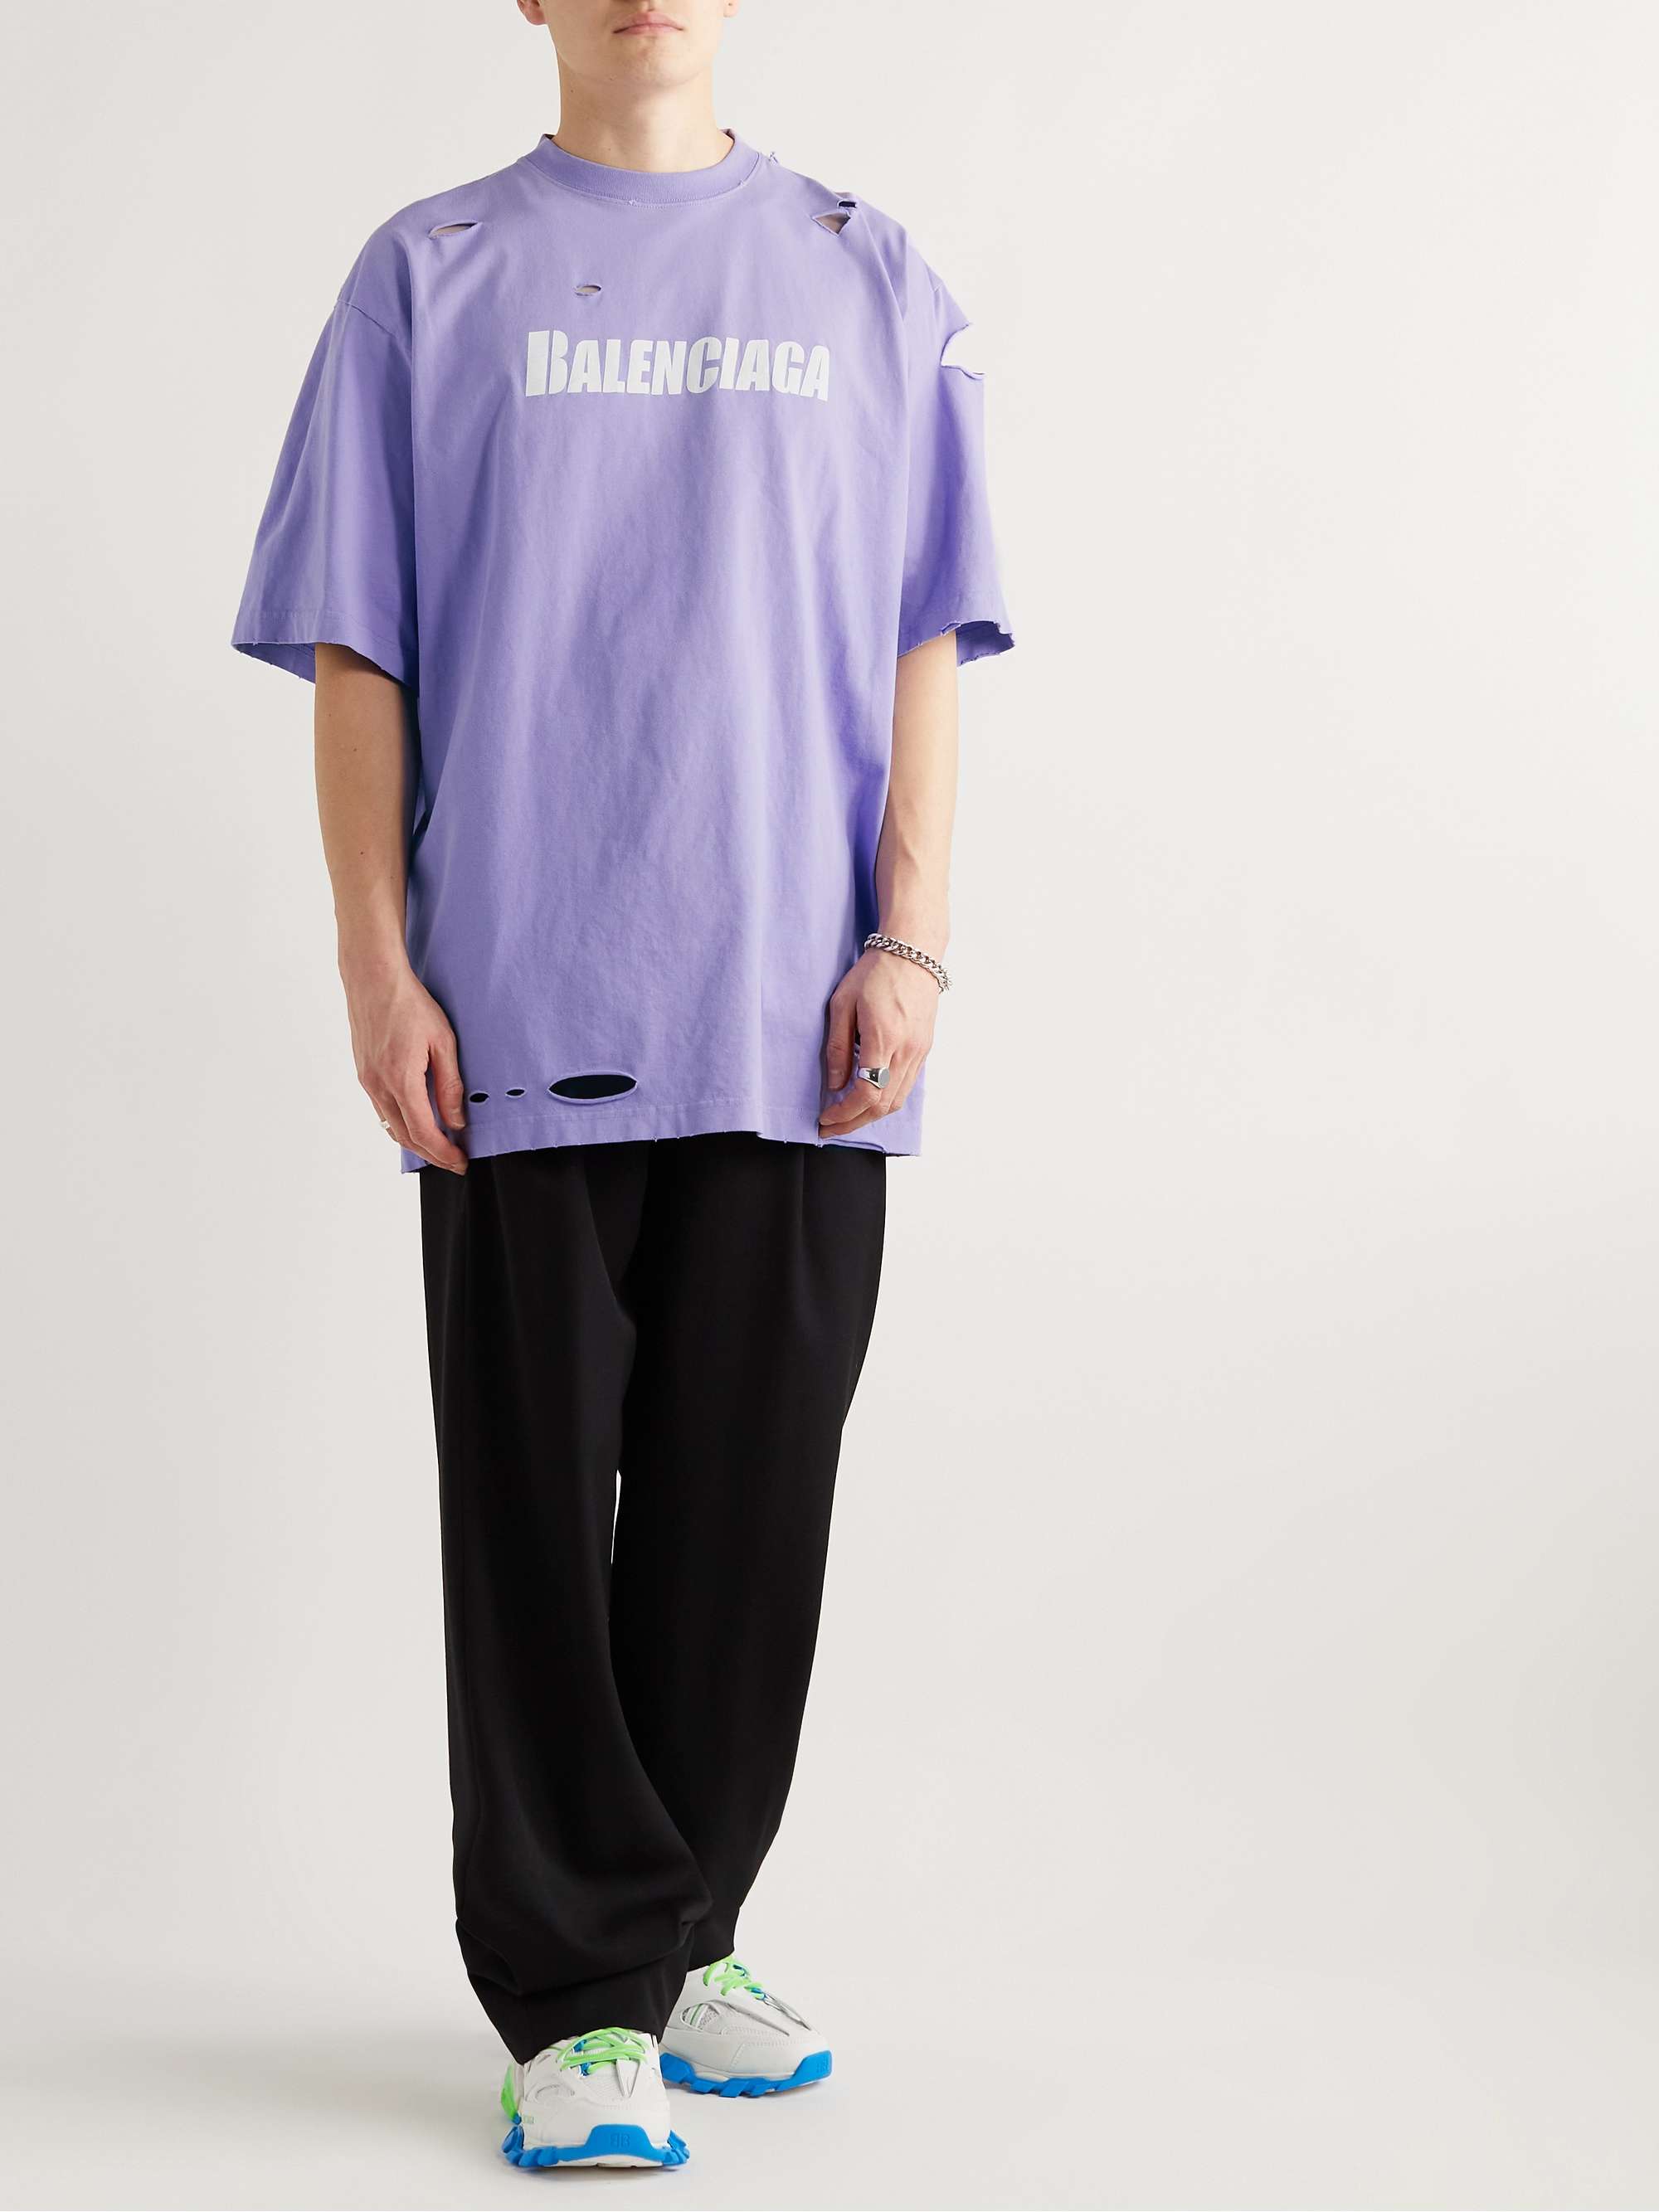 Balenciaga Tshirt Shirt Double Shirt are making the Internet crazy